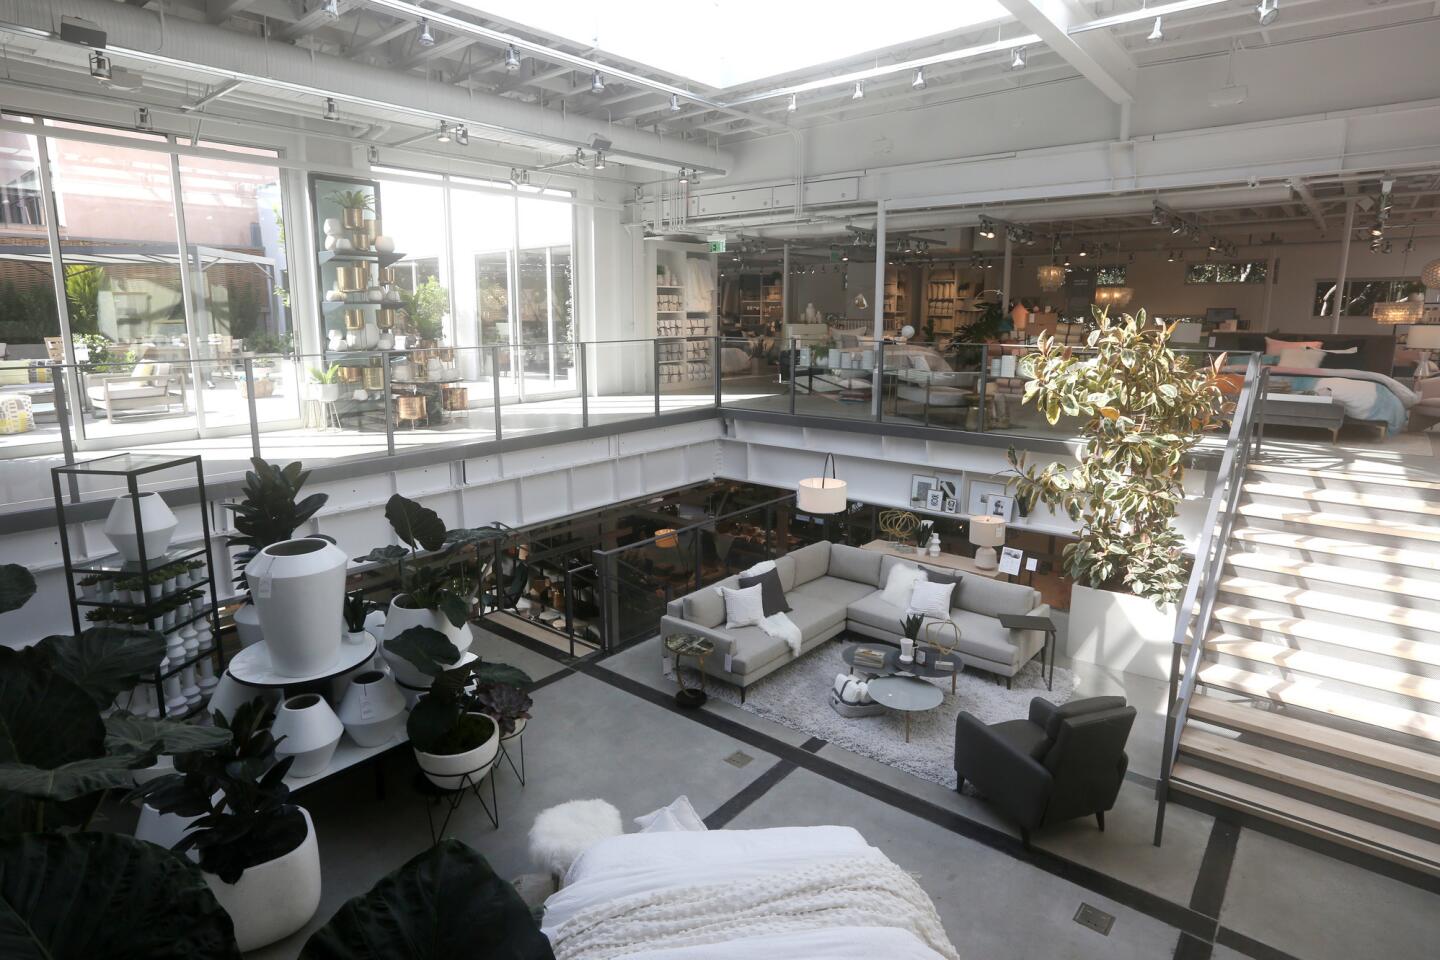 West Elm Santa Monica debuts new concept store that showcases local  artisans - Los Angeles Times